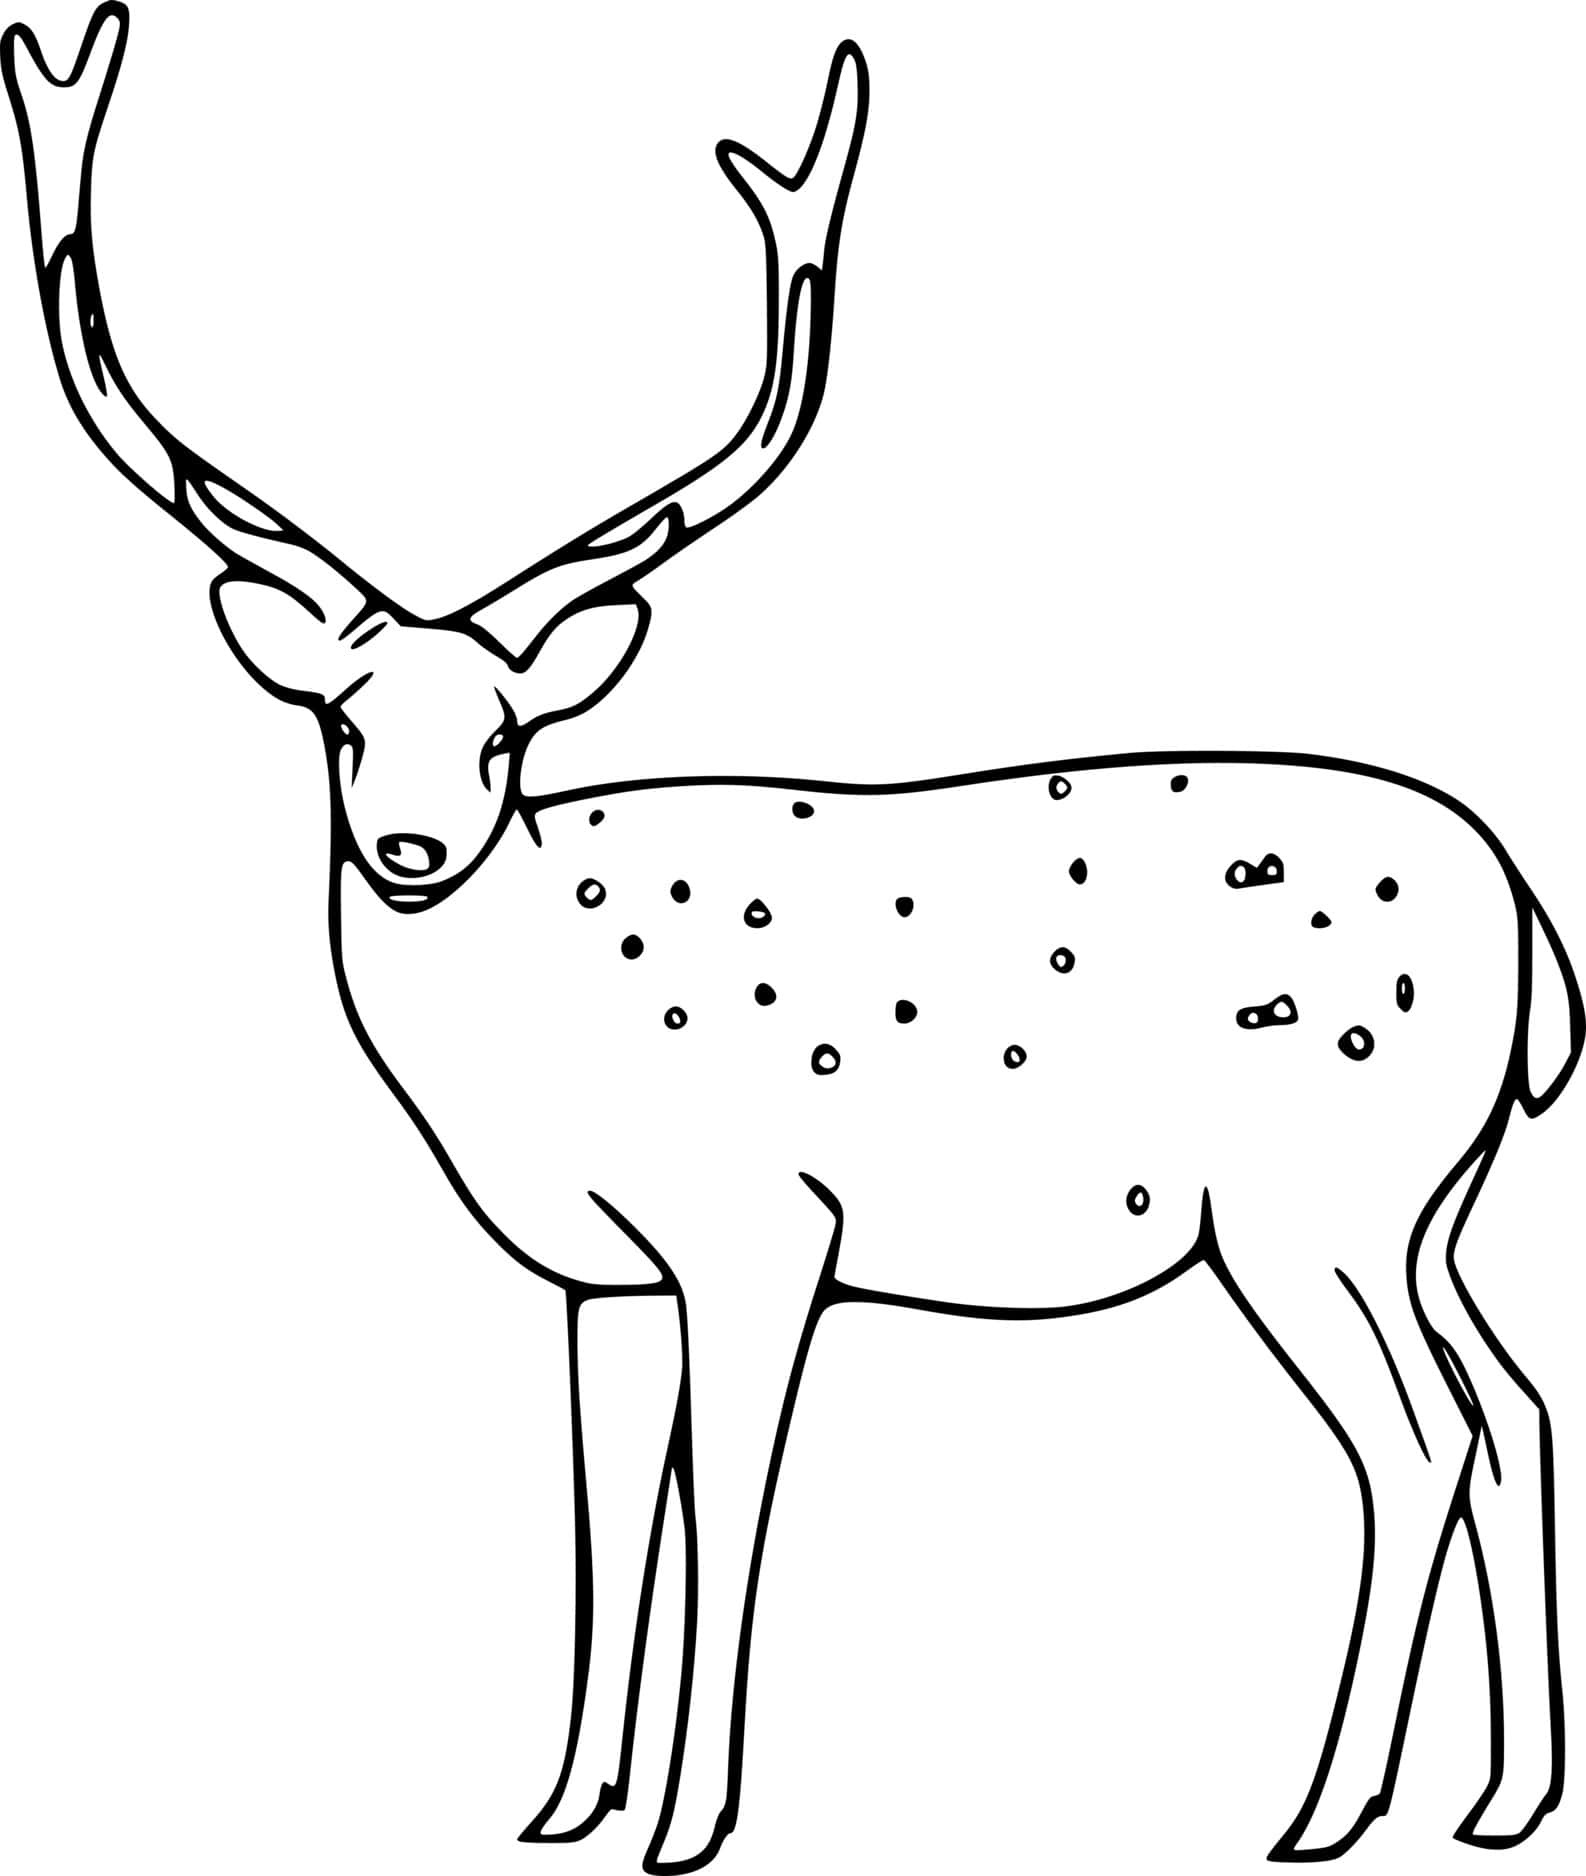 Easy Sika Deer Coloring Page